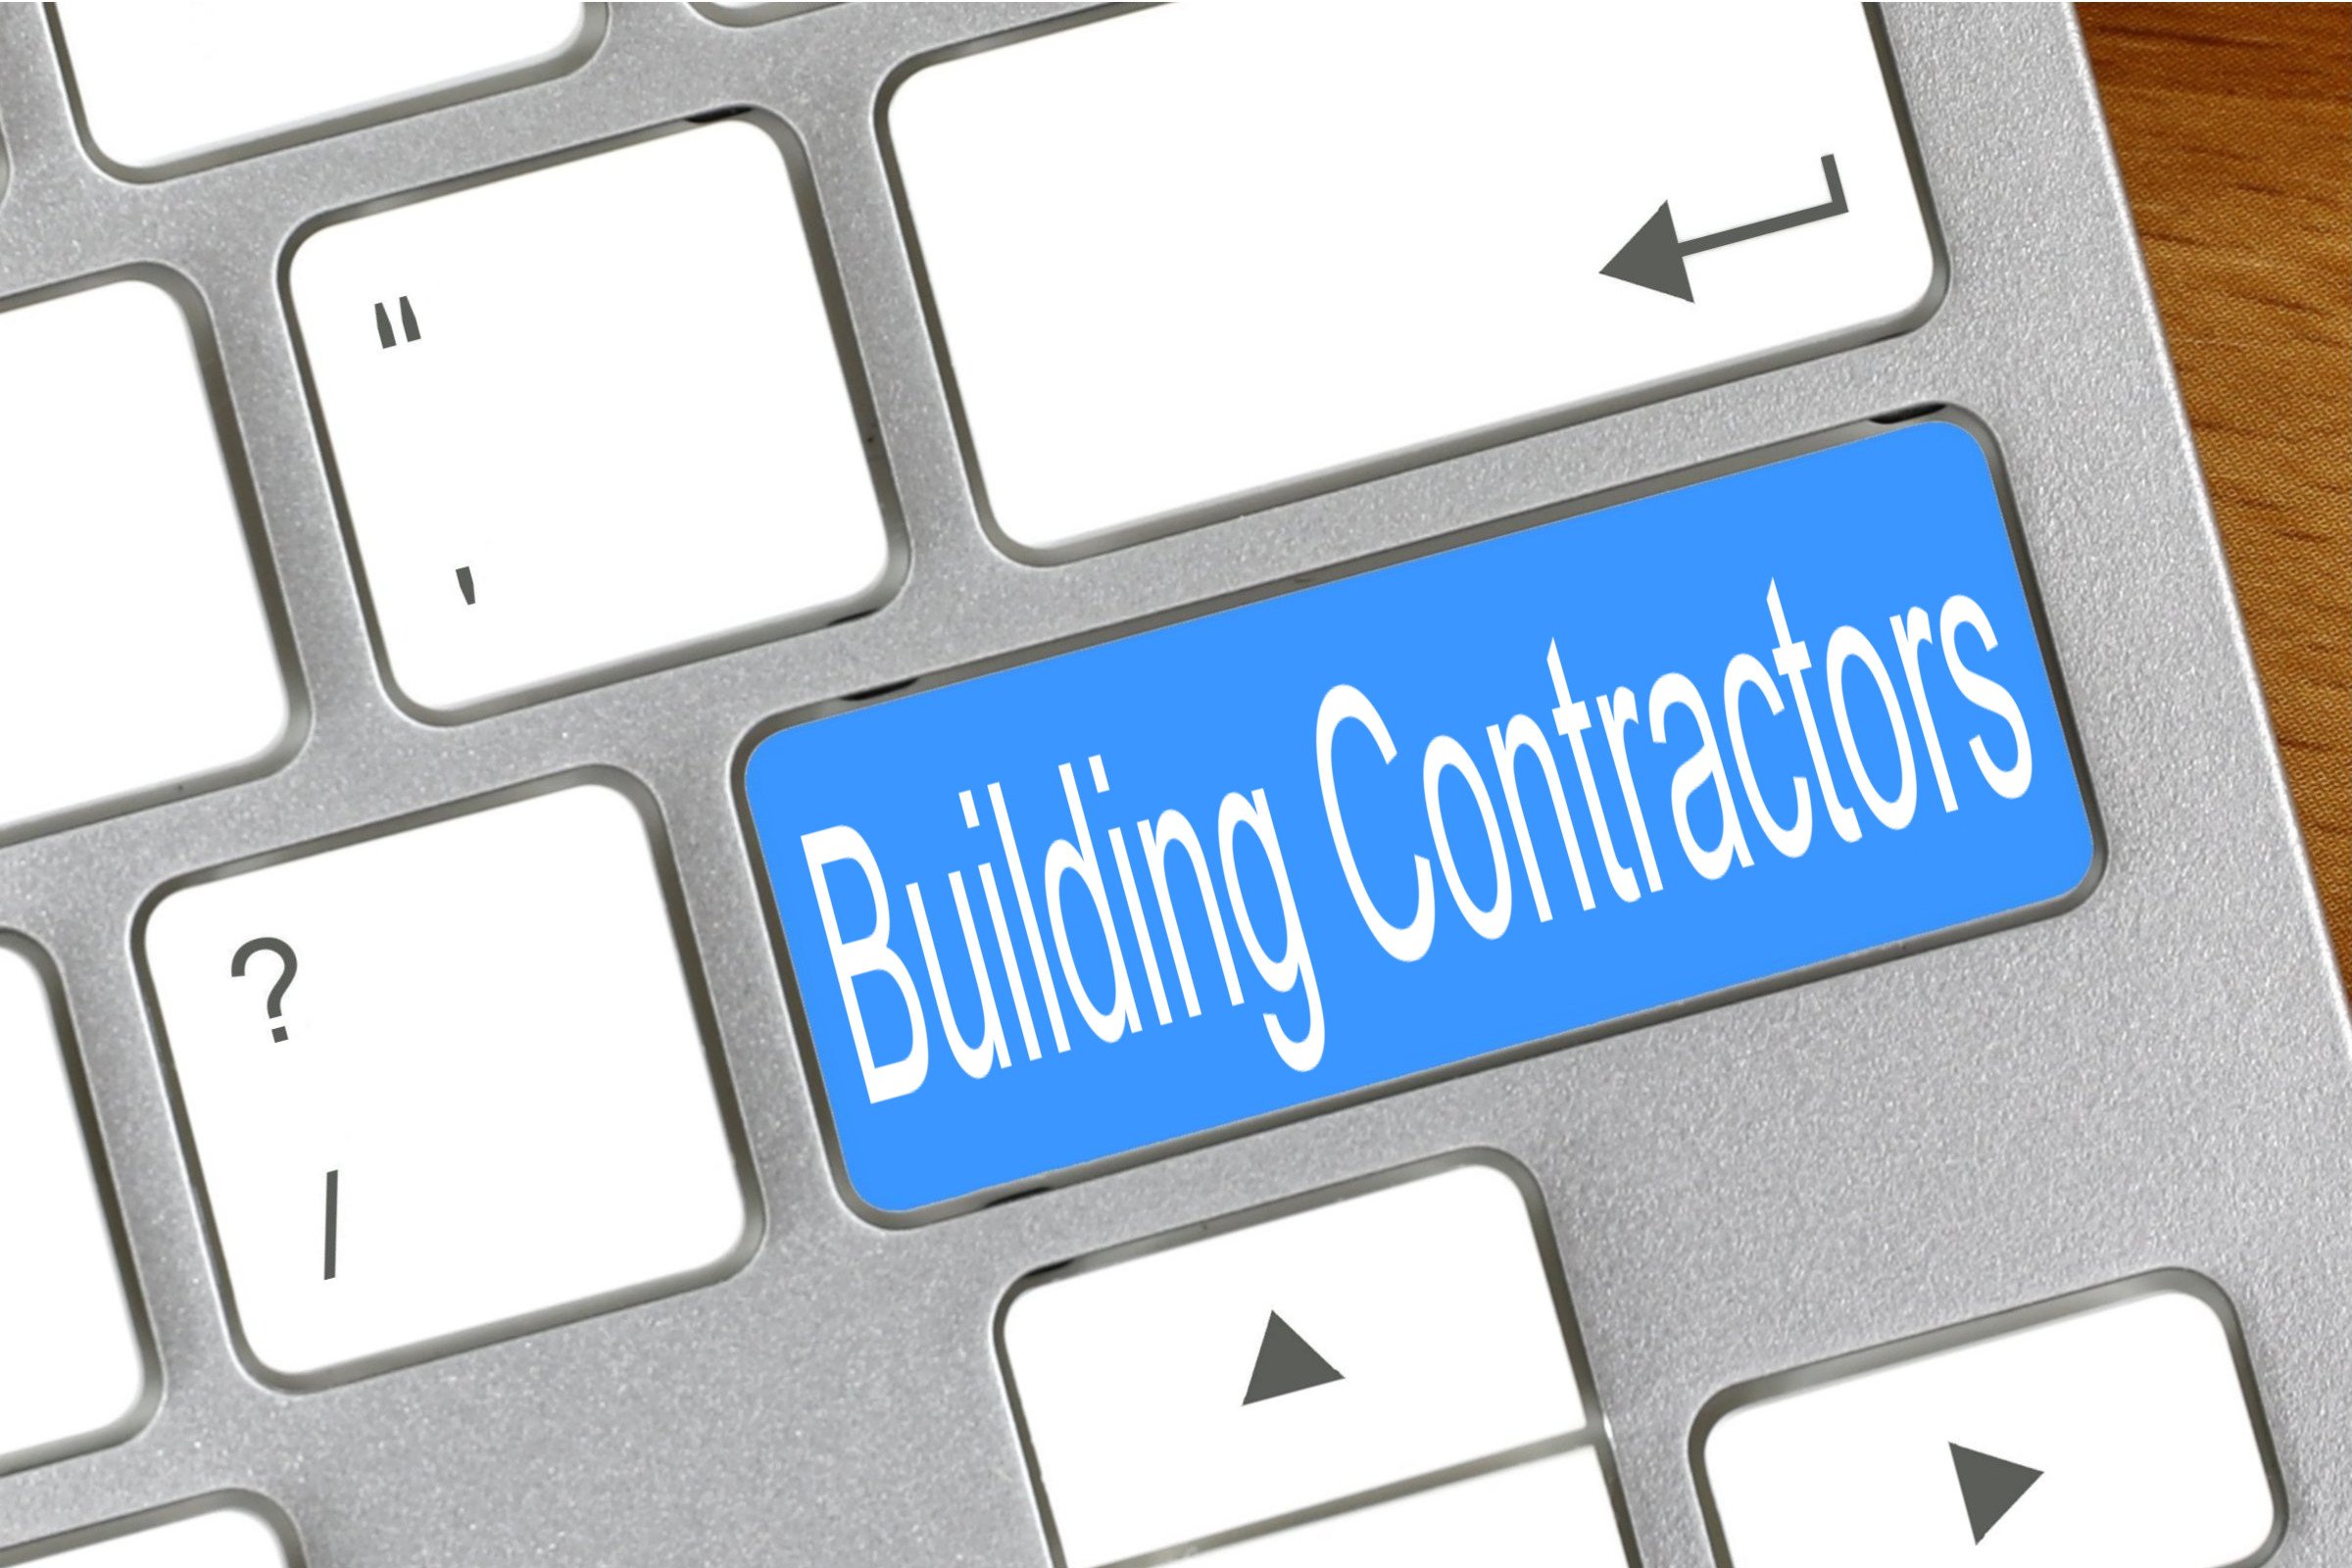 building contractors